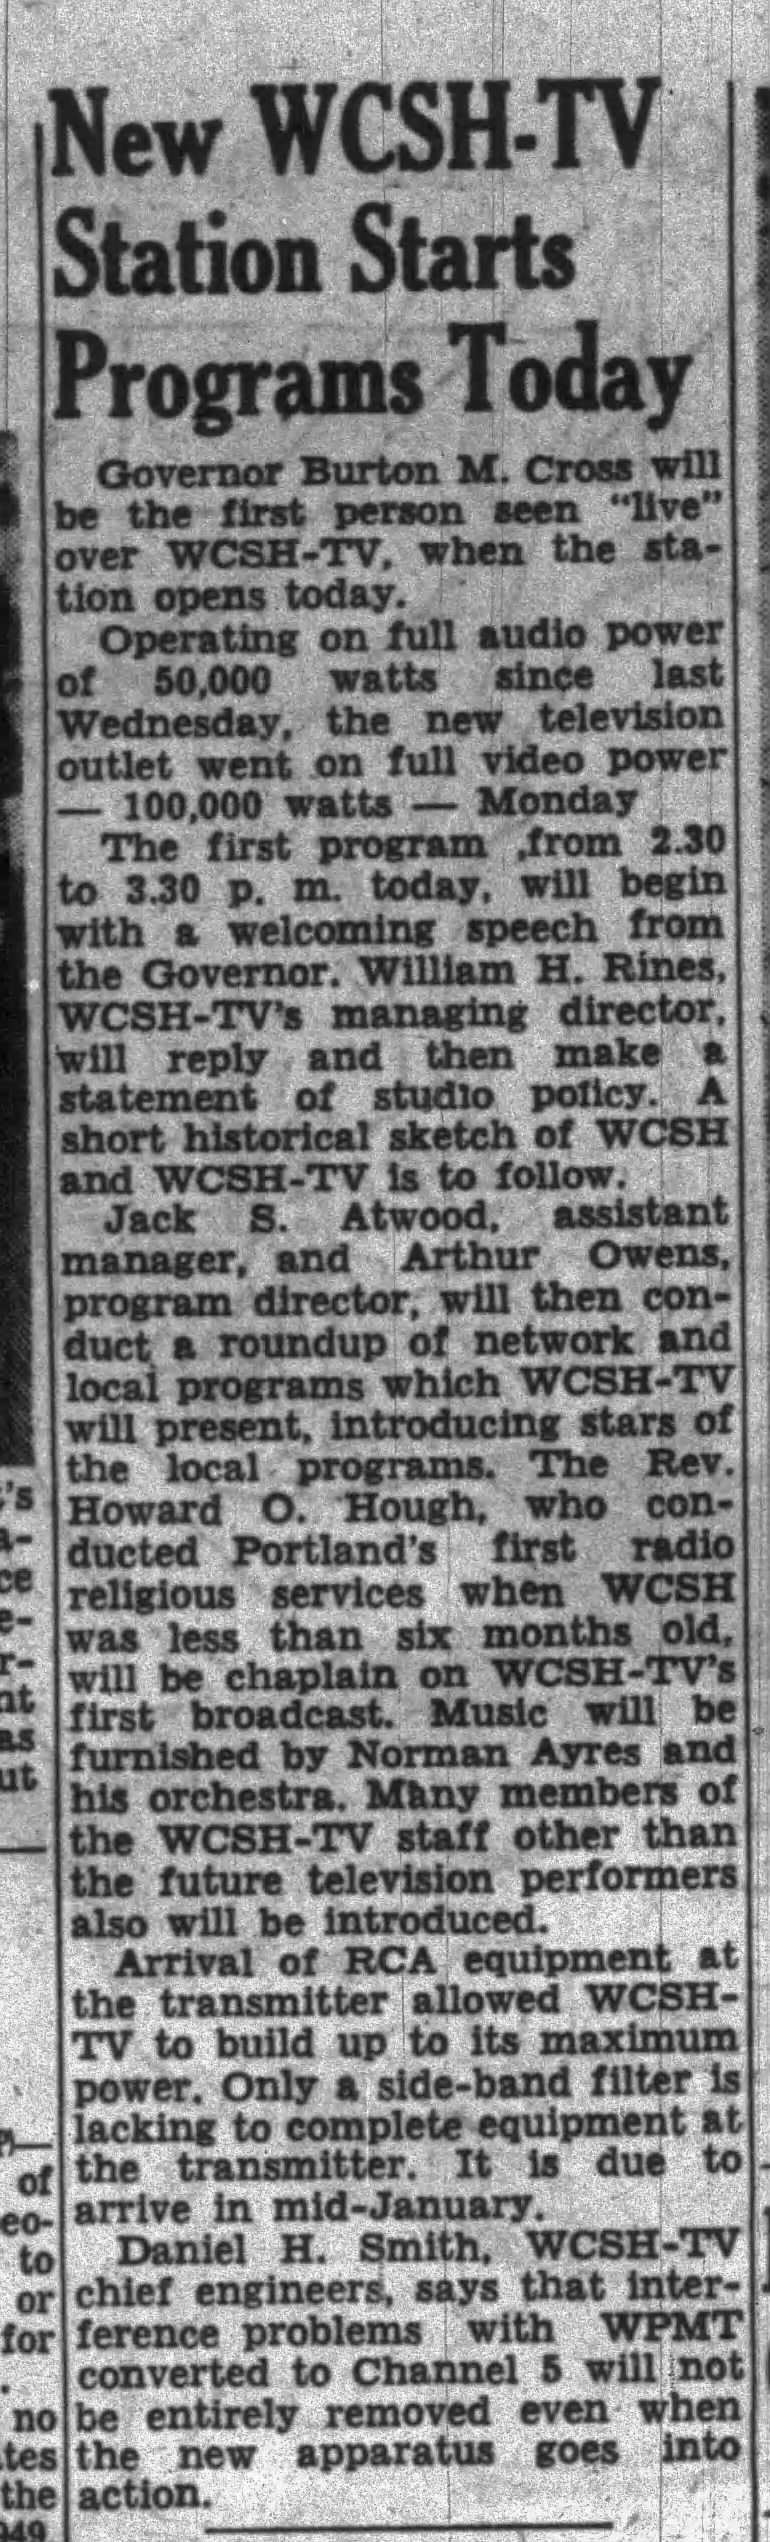 New WCSH-TV Station Starts Programs Today